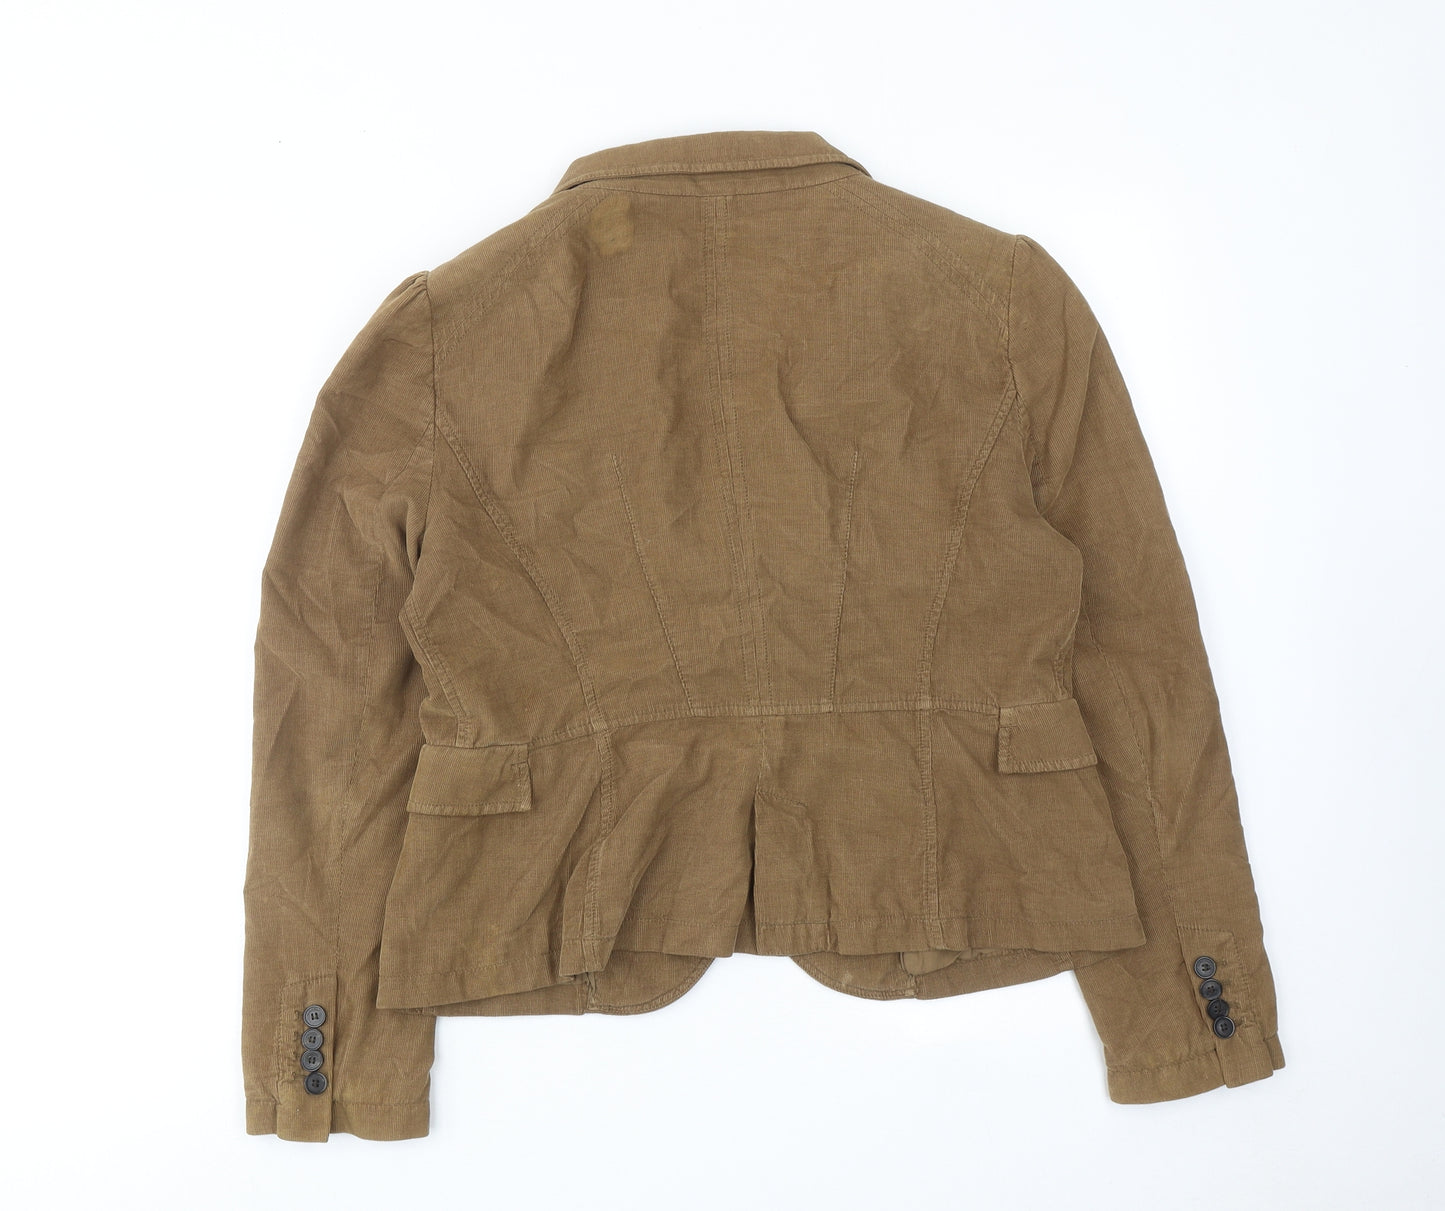 Zara Womens Brown Cotton Jacket Blazer Size XL